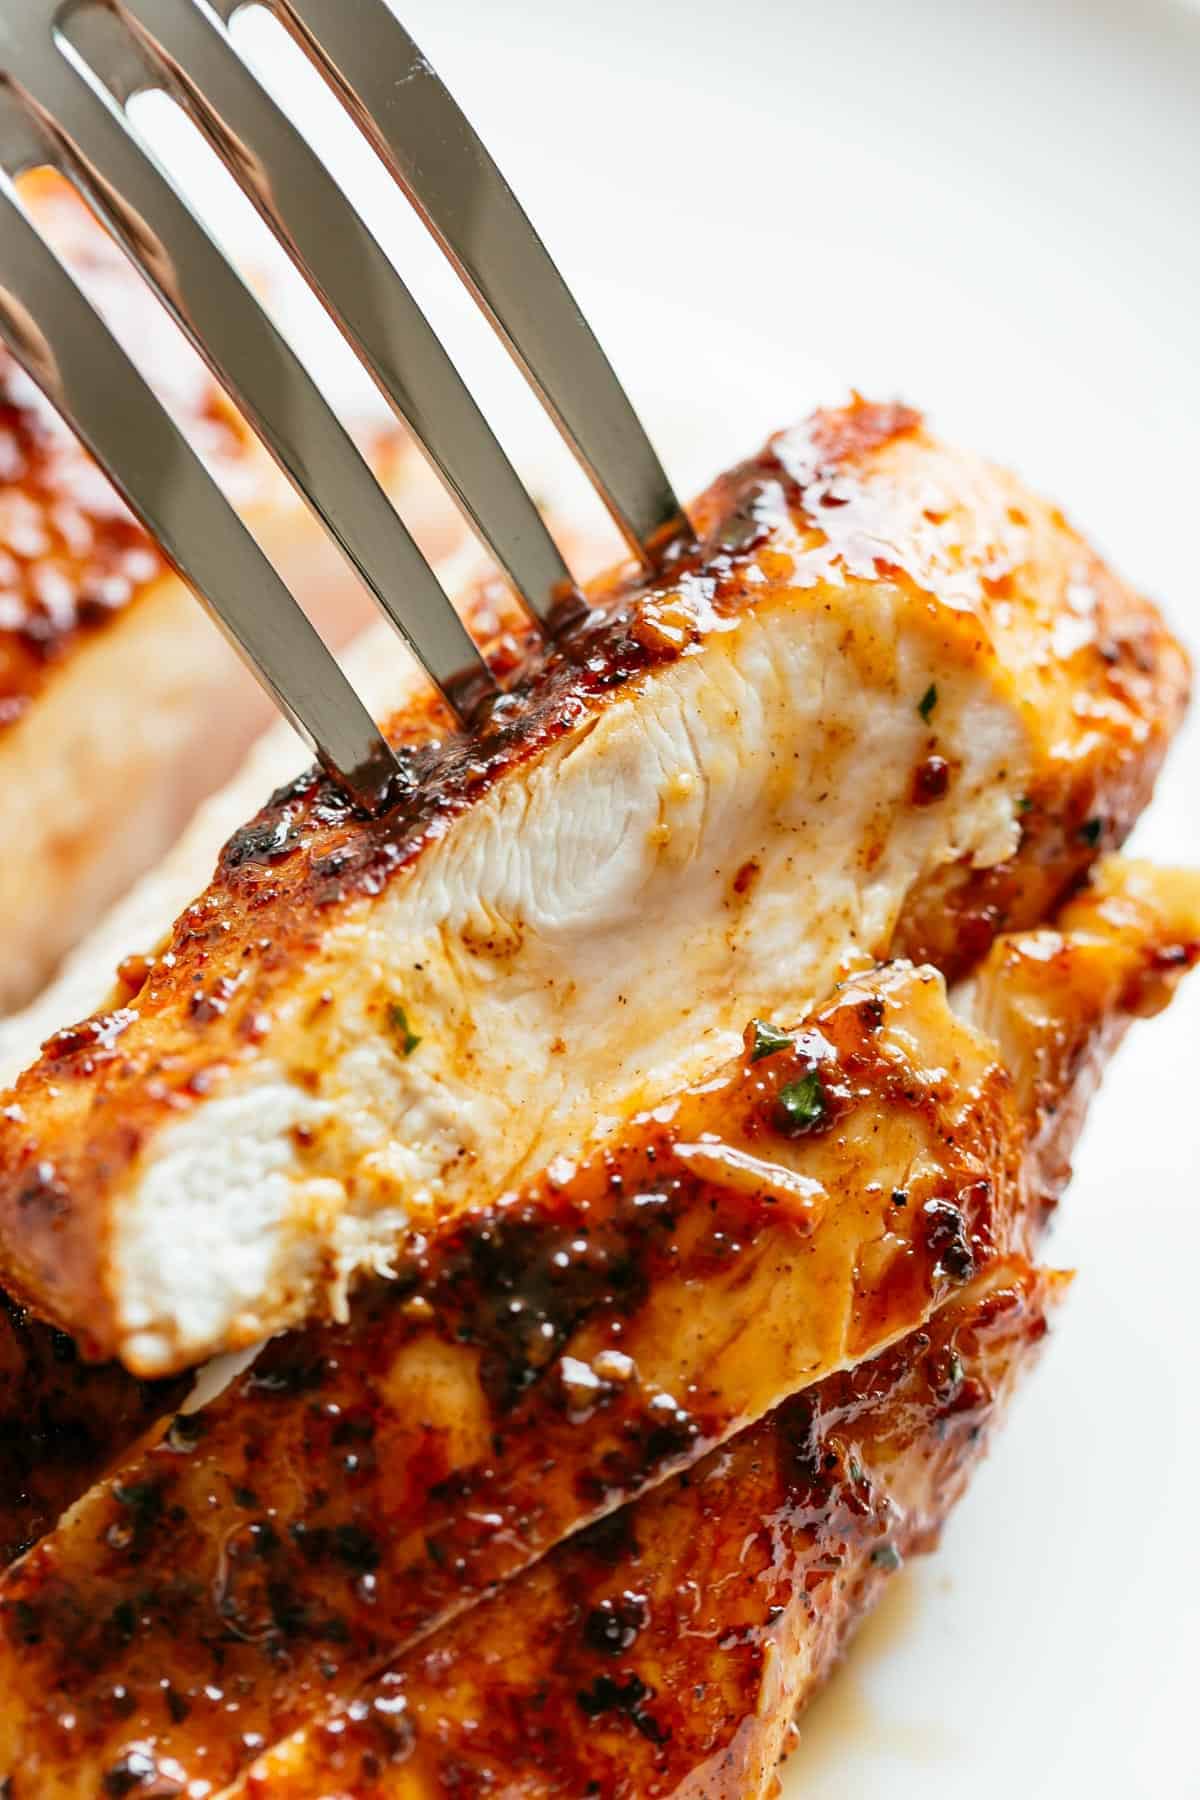 Sliced juicy oven baked chicken breast #easychicken #dinner #recipe #bakedchicken #chickenbreast